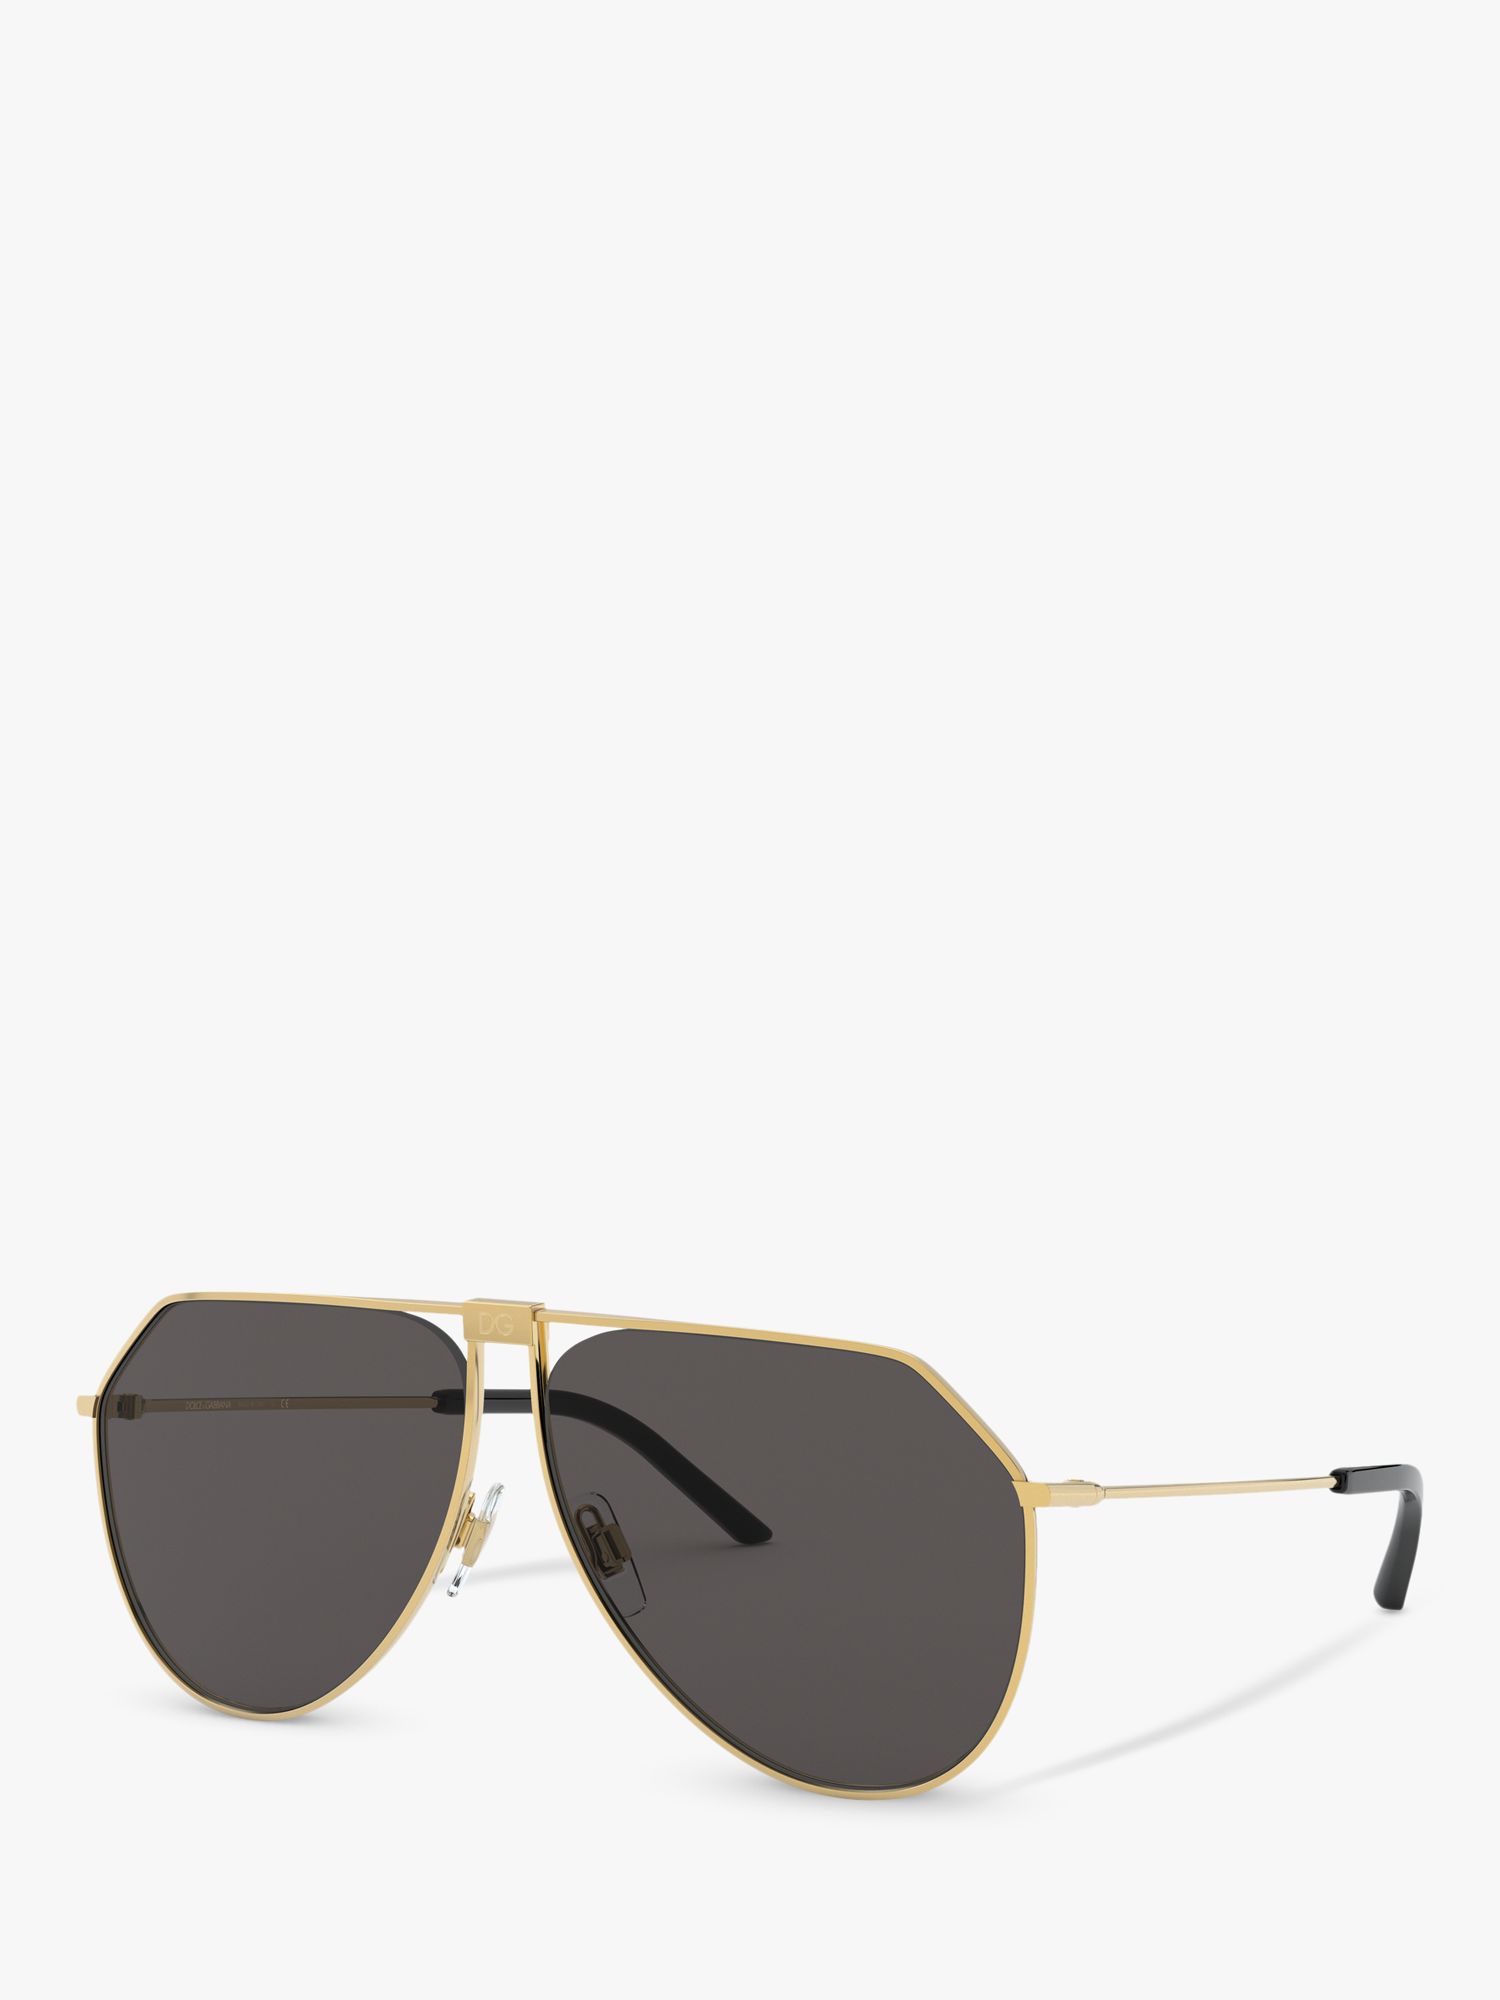 Dolce & Gabbana DG2248 Men's Aviator Sunglasses, Gold/Grey at John Lewis &  Partners